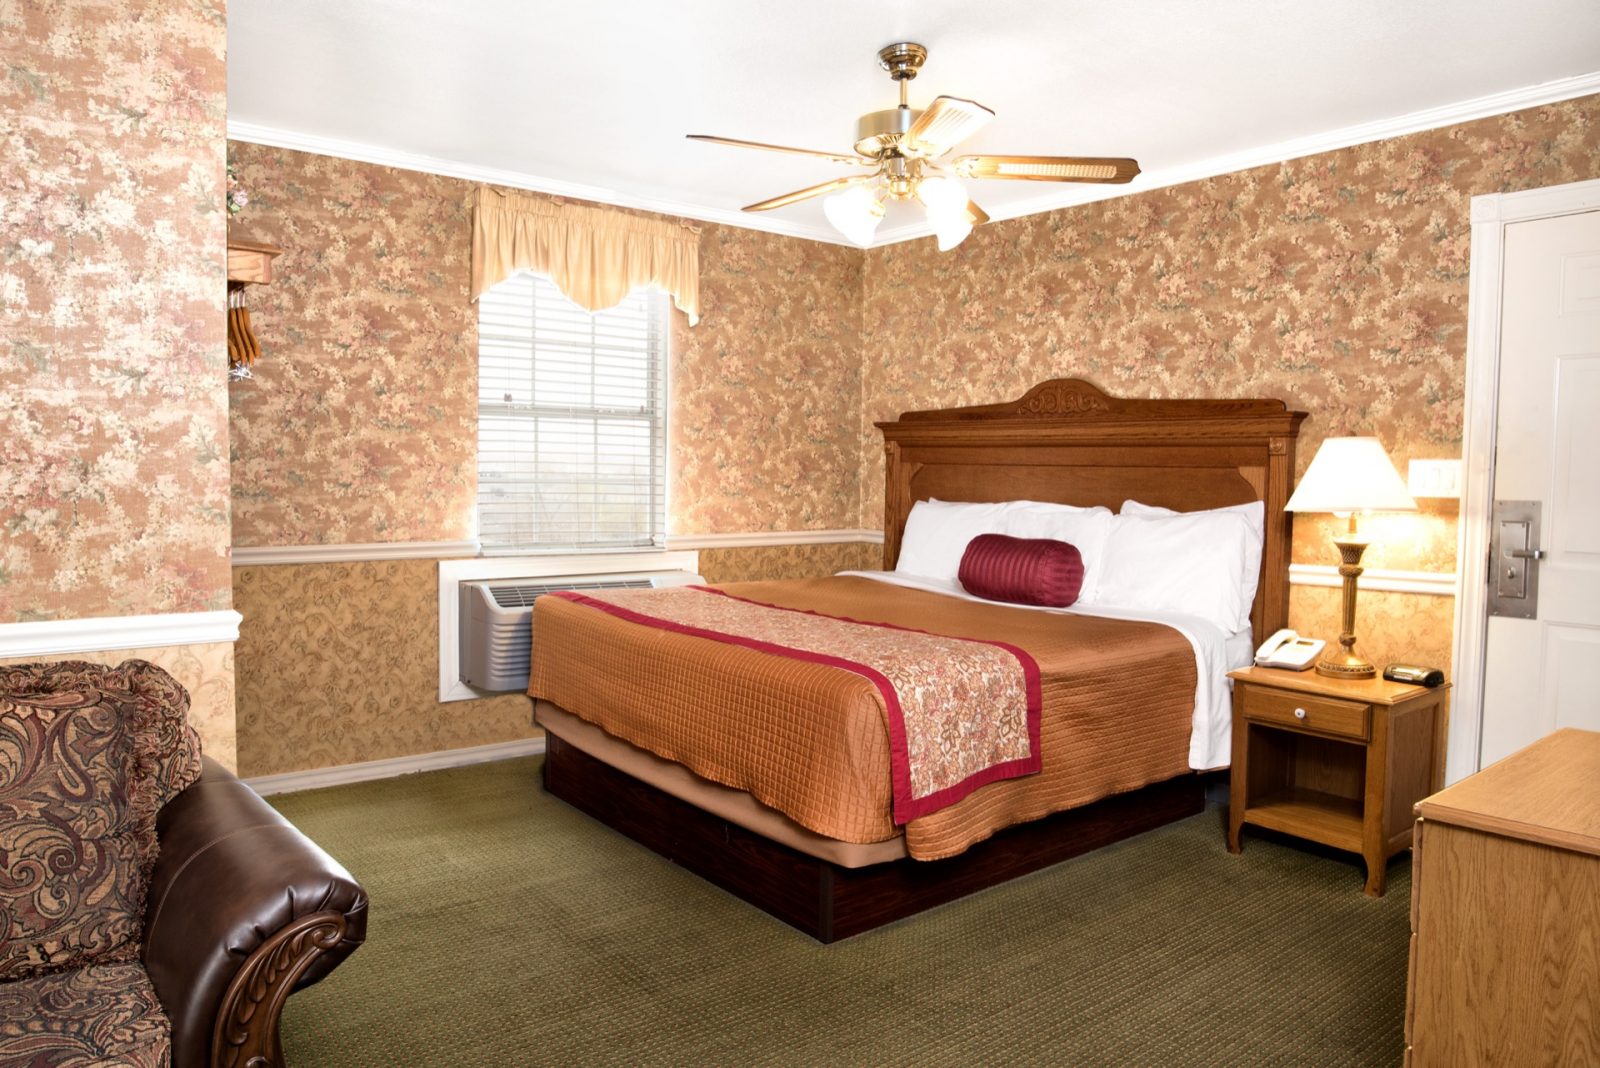 Gazebo Inn in Branson, MO - 500 reviews, price from $50 | Planet of Hotels